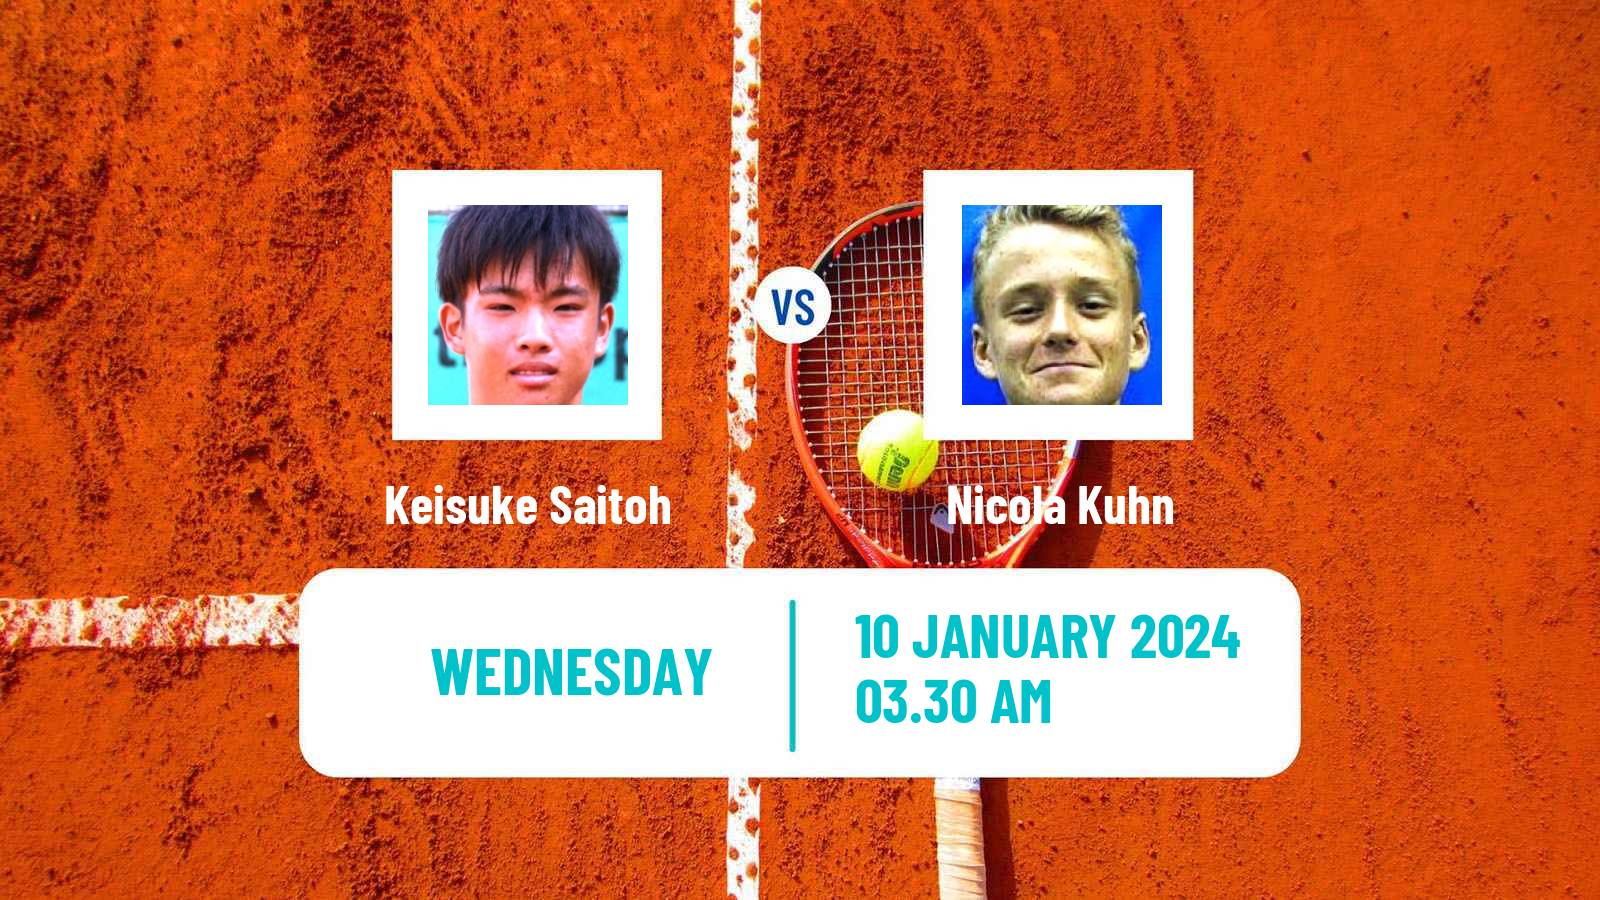 Tennis ITF M15 Monastir 2 Men Keisuke Saitoh - Nicola Kuhn